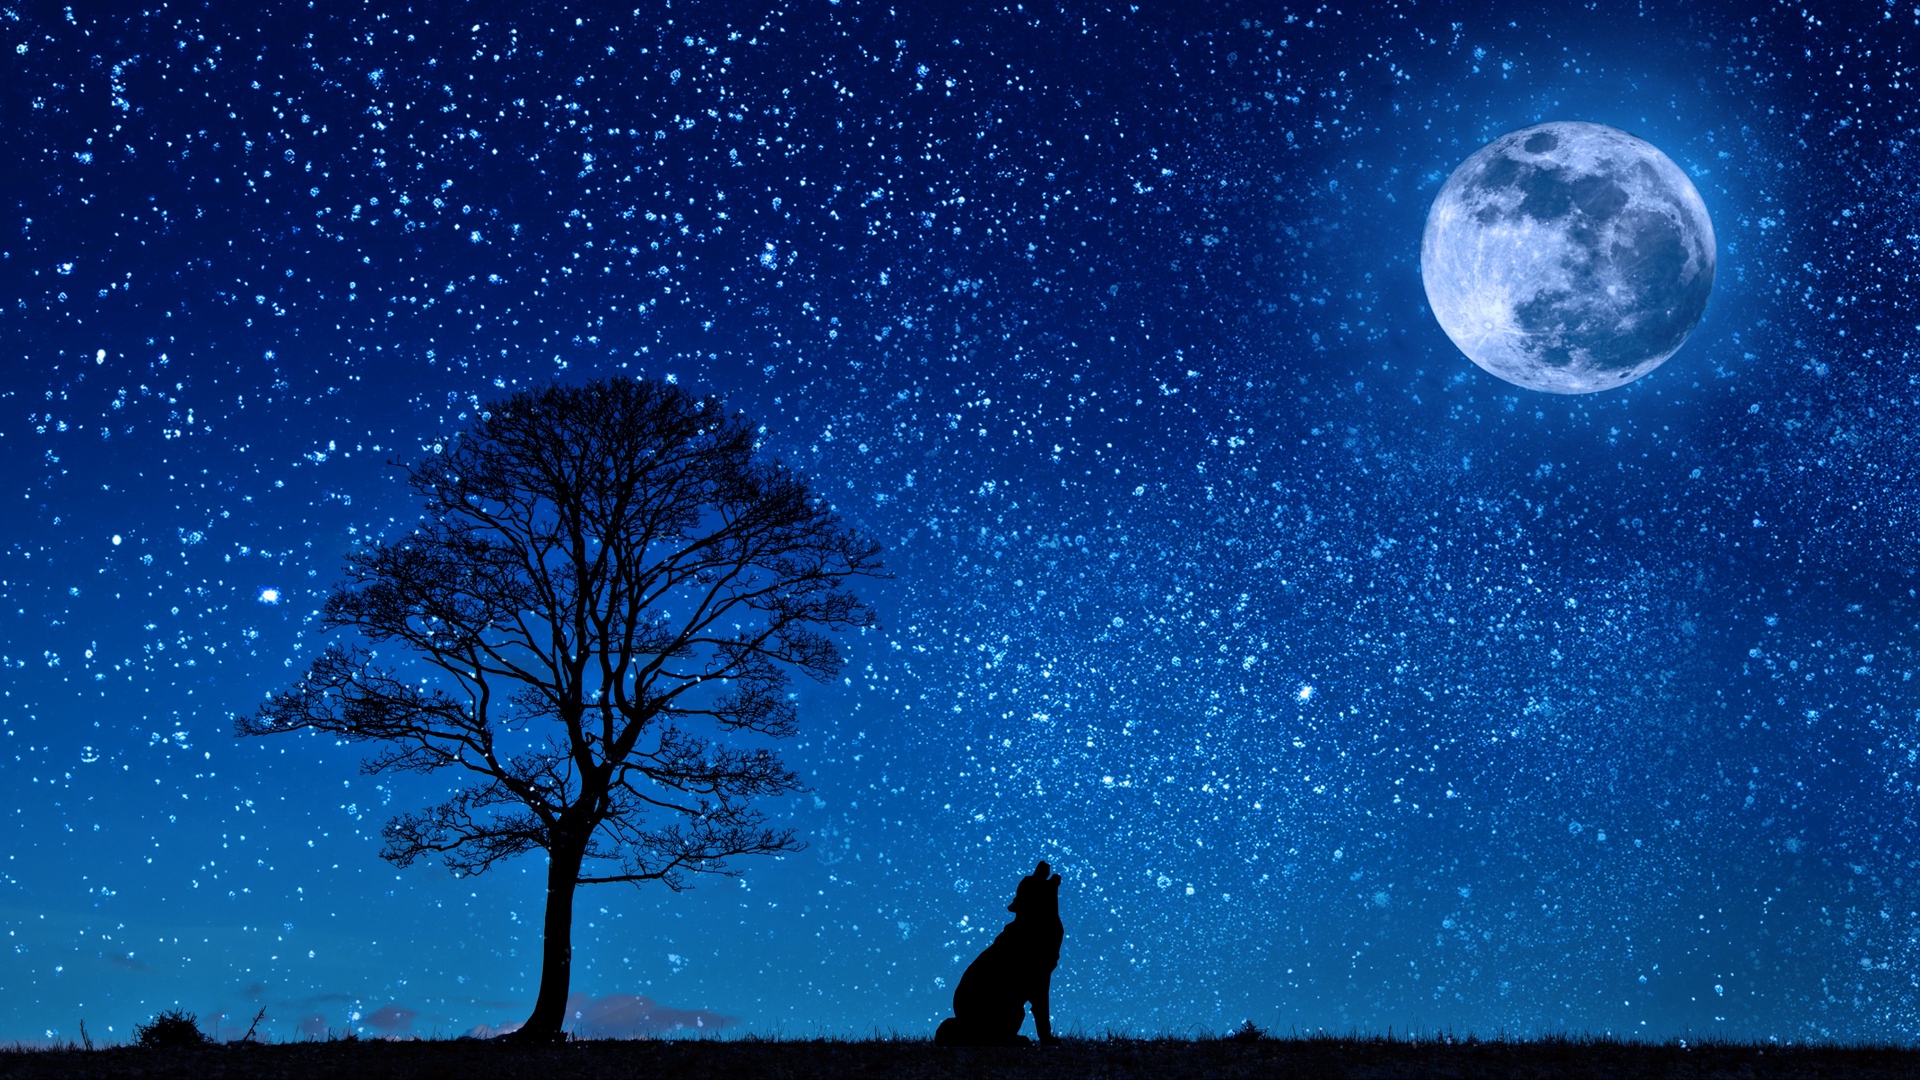 Download wallpaper 1920x1080 wolf, starry sky, tree, moon full HD